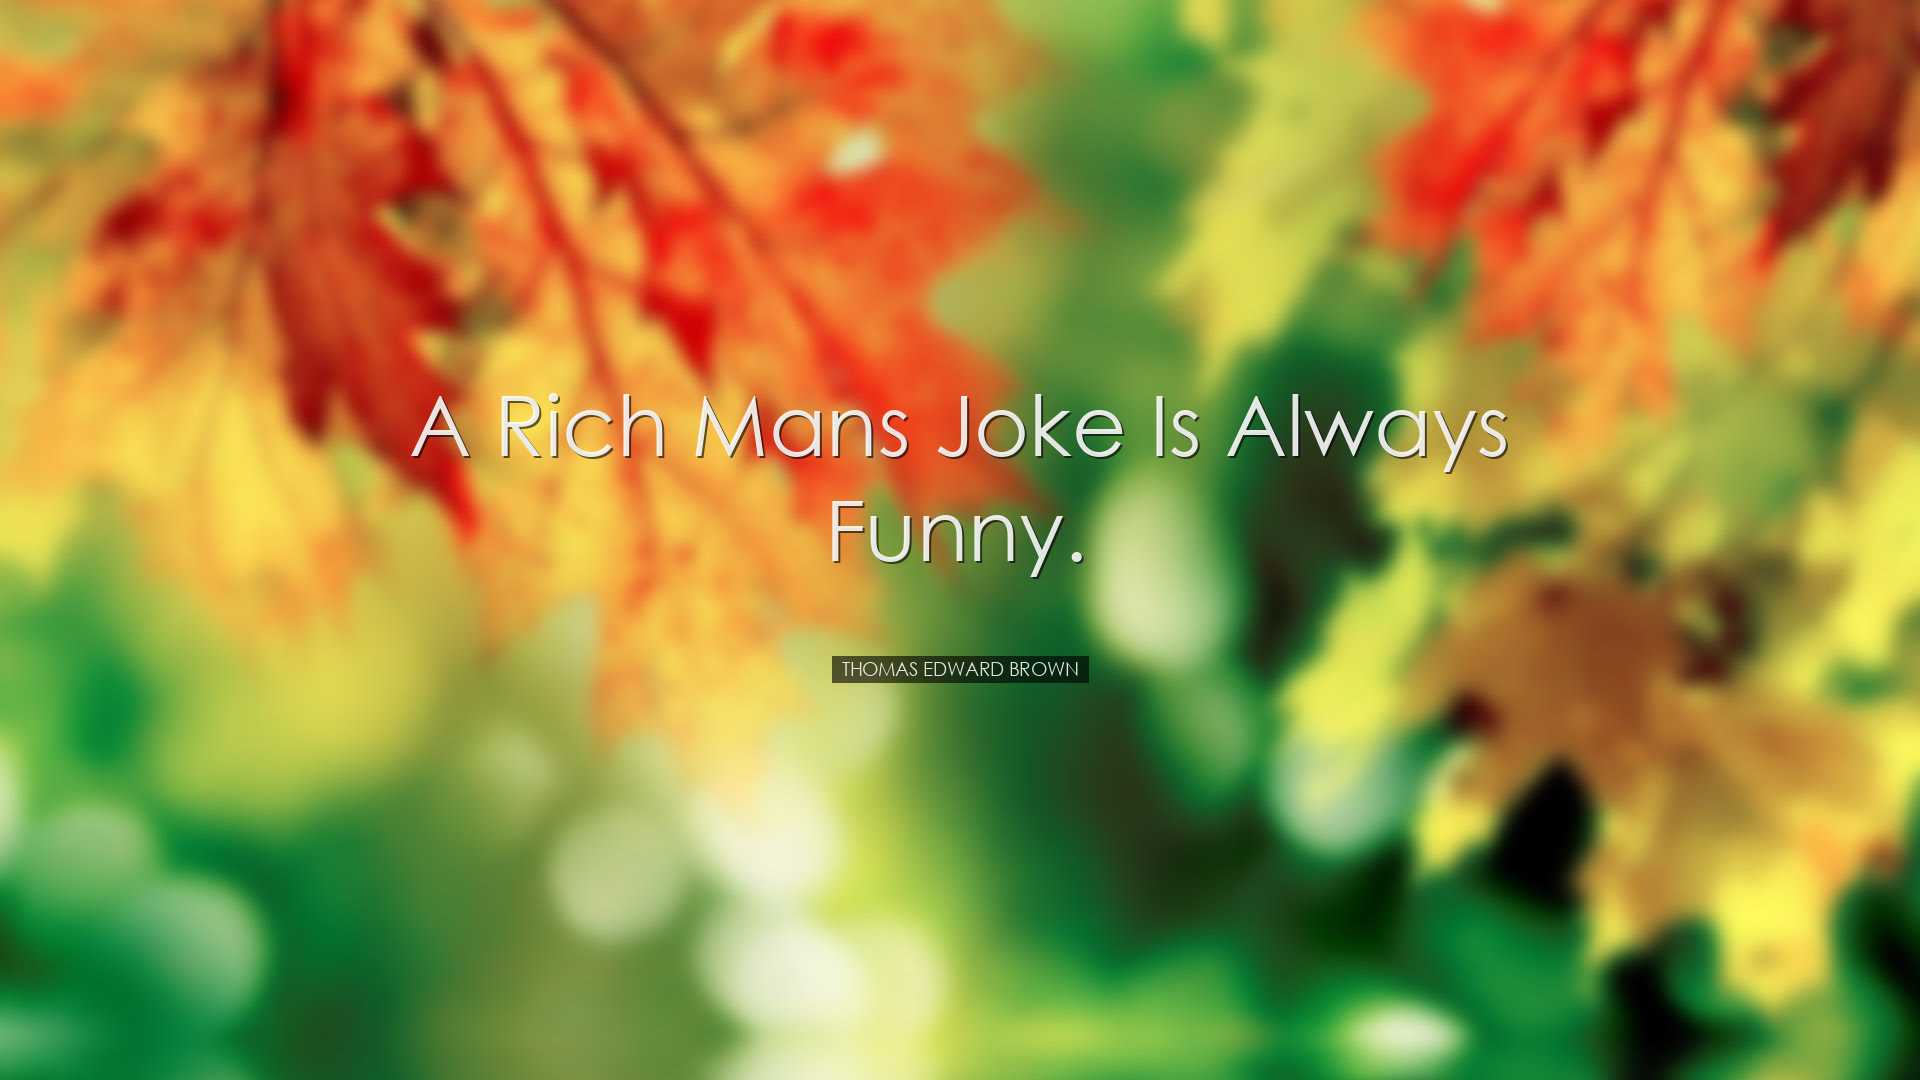 A rich mans joke is always funny. - Thomas Edward Brown